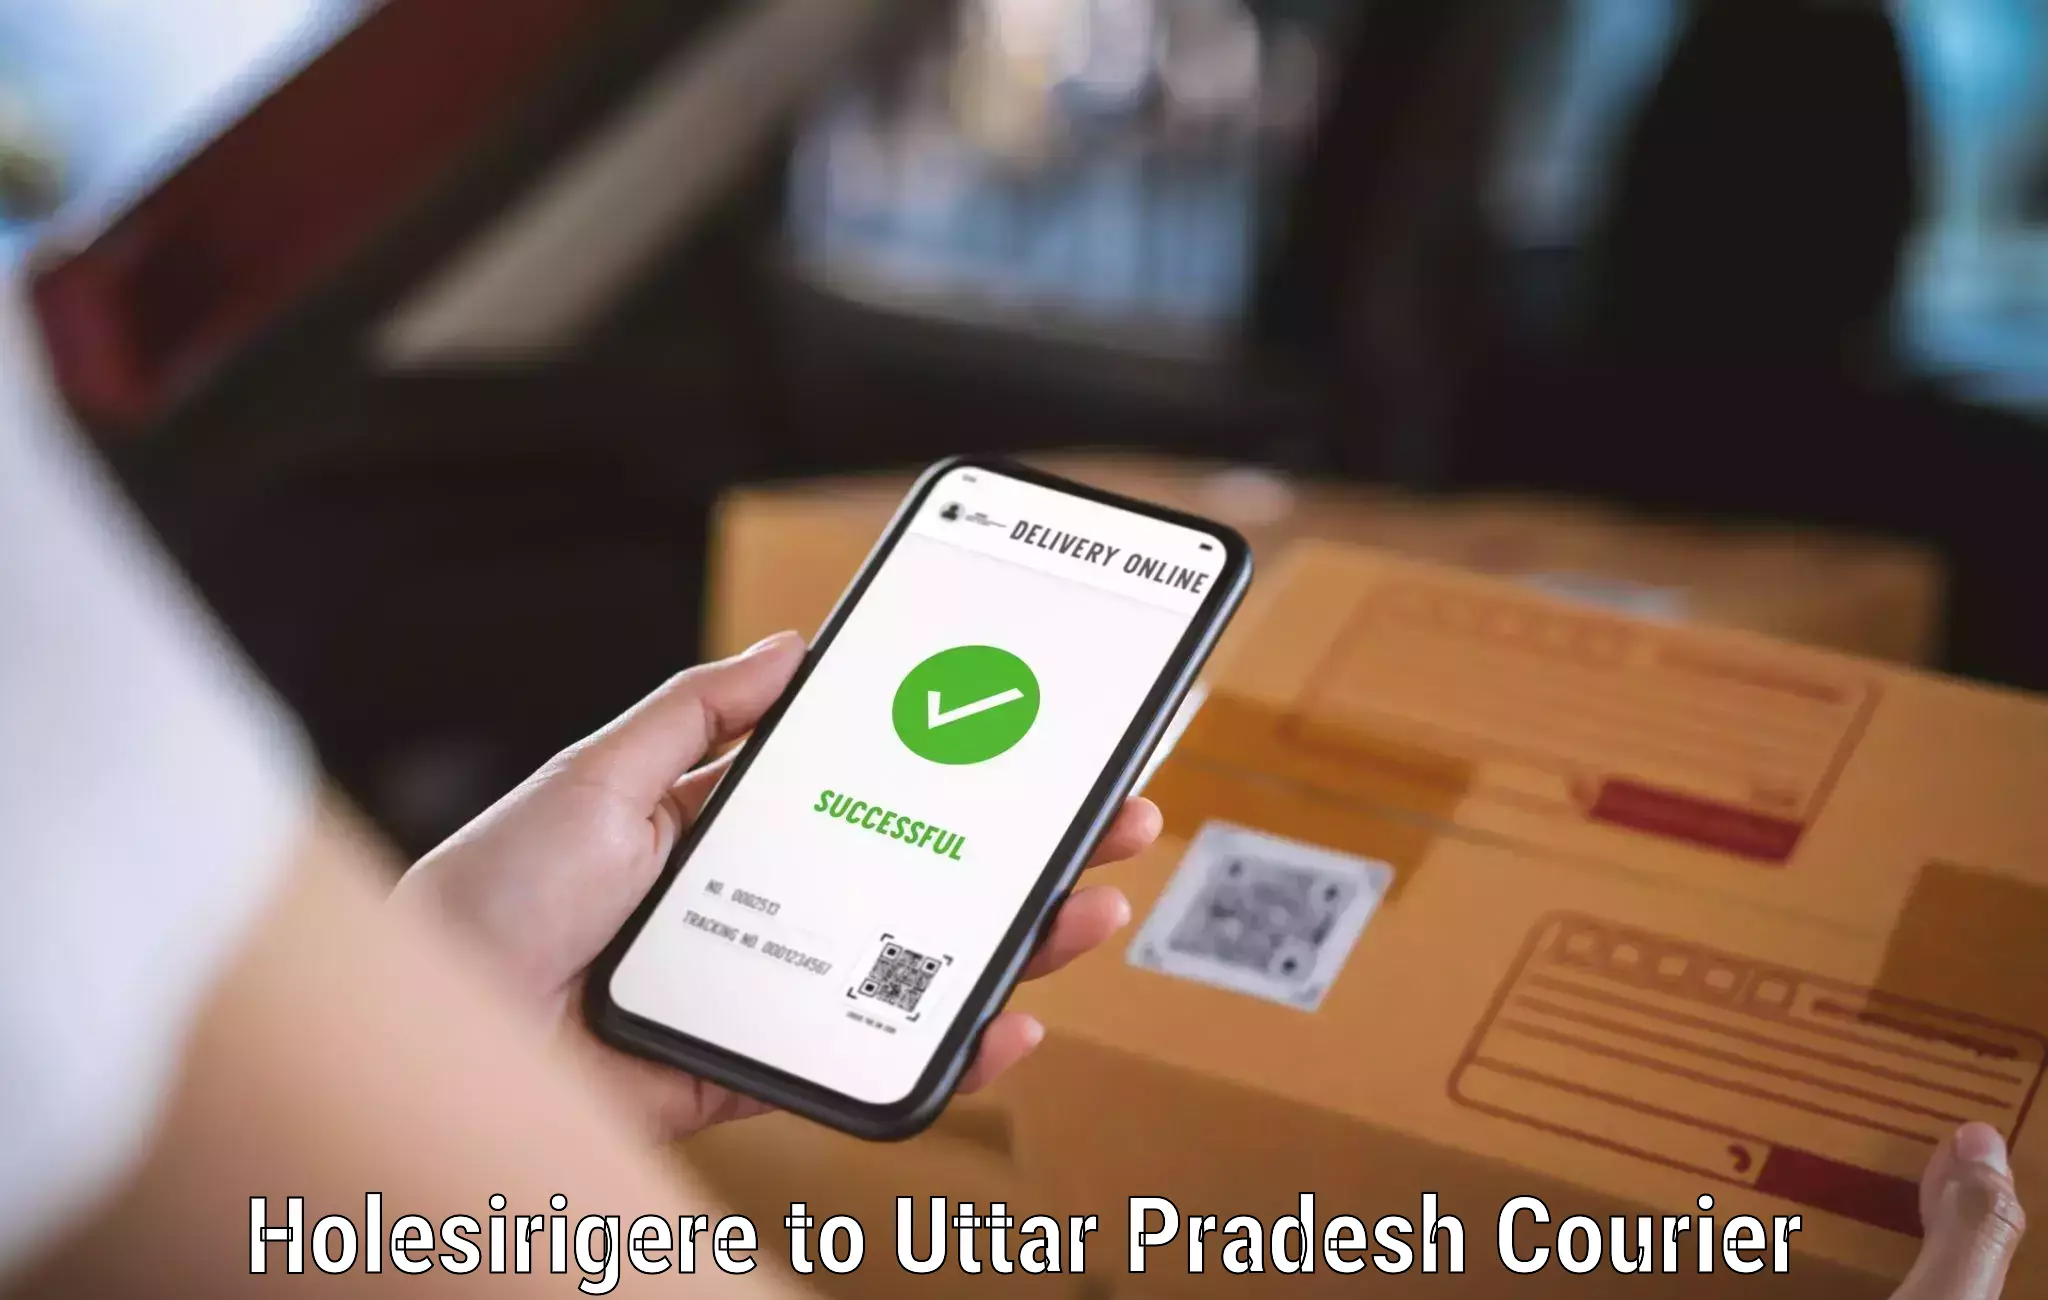 High-capacity parcel service Holesirigere to Uttar Pradesh